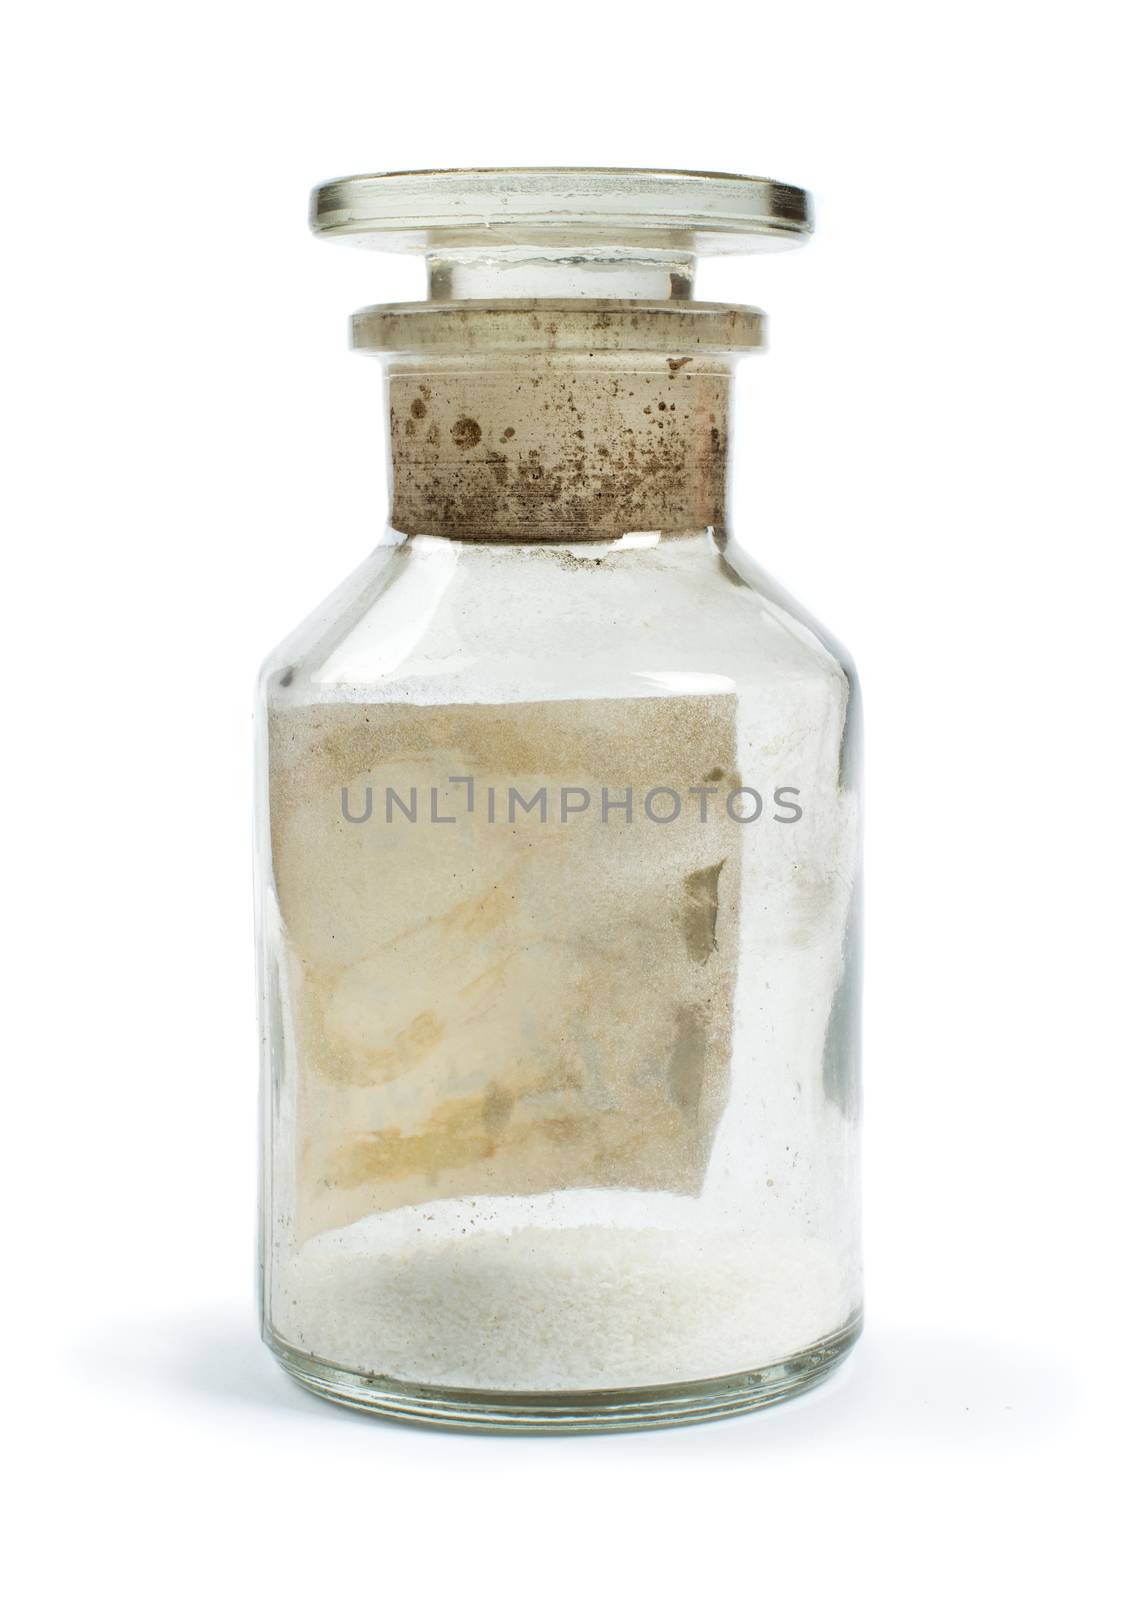 Dark transparent glass jars with chemicals